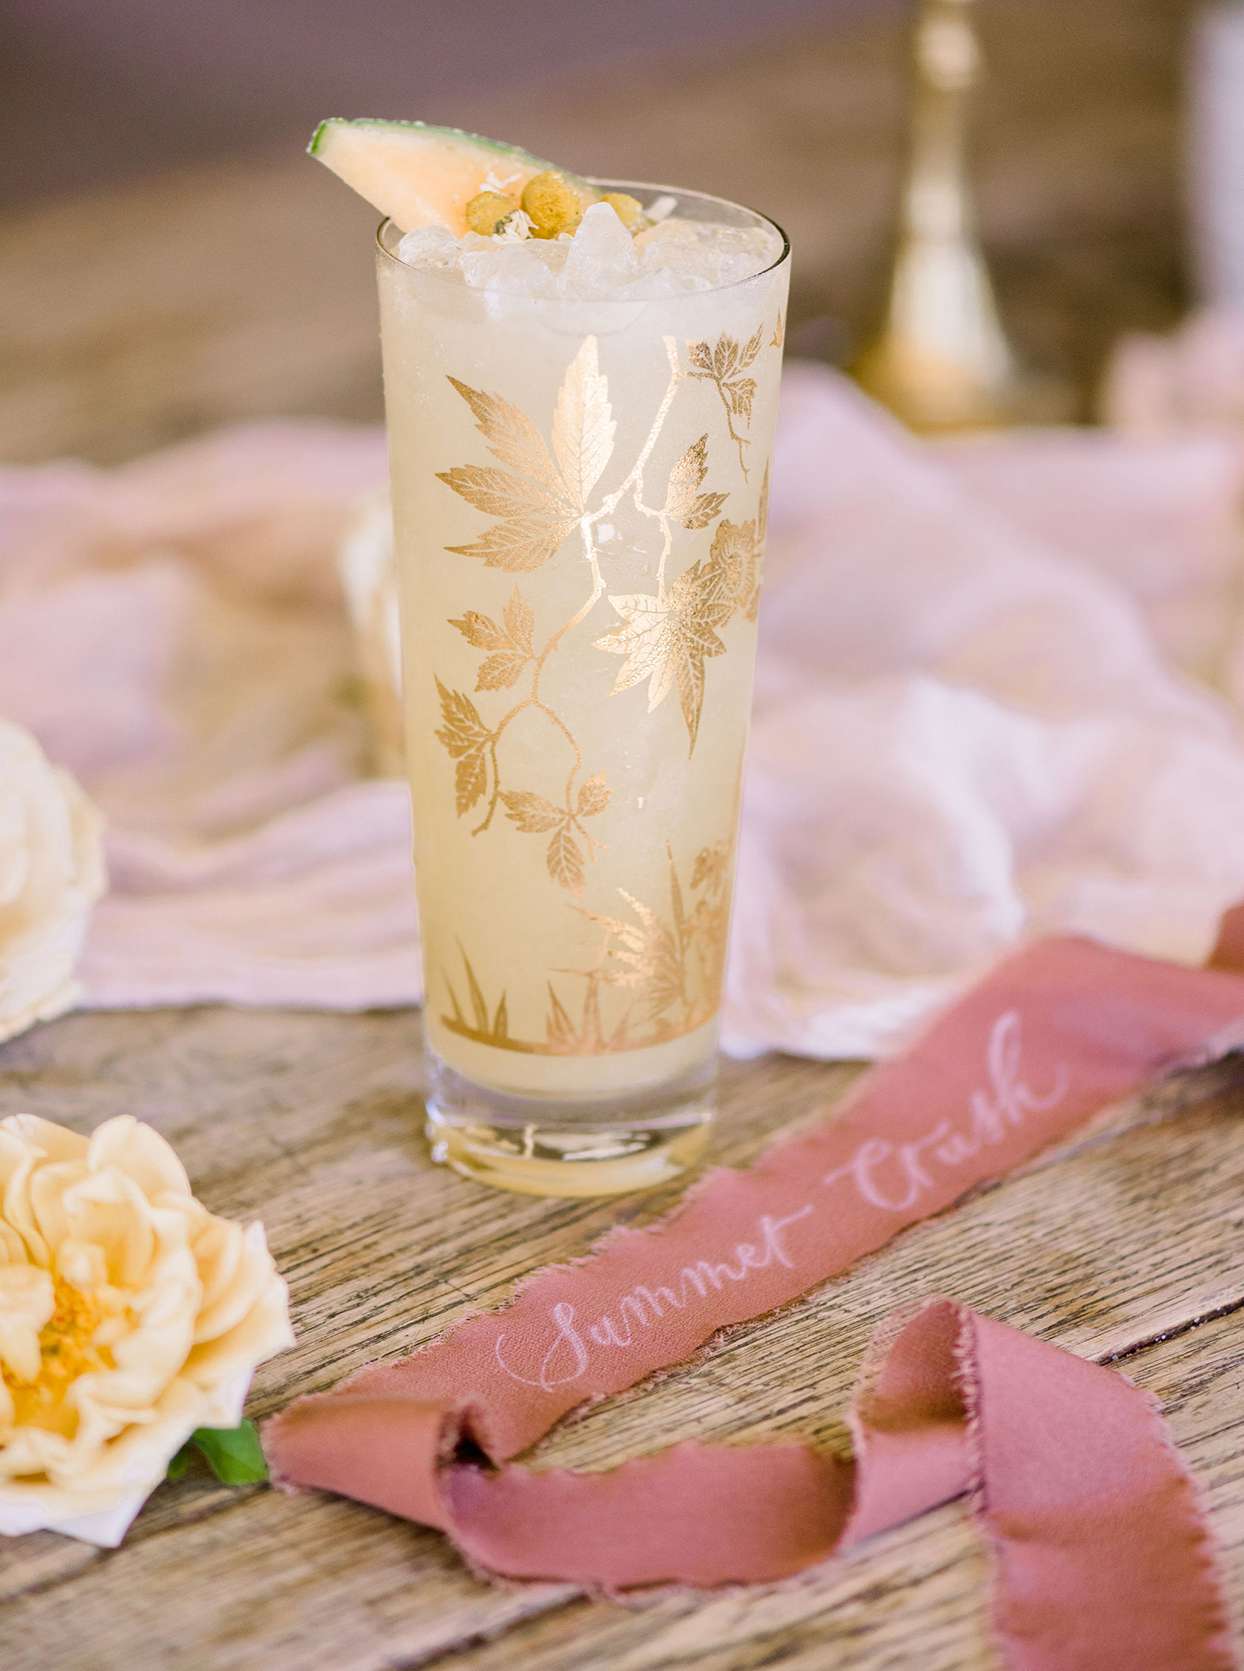 A Summer Crush wedding cocktail